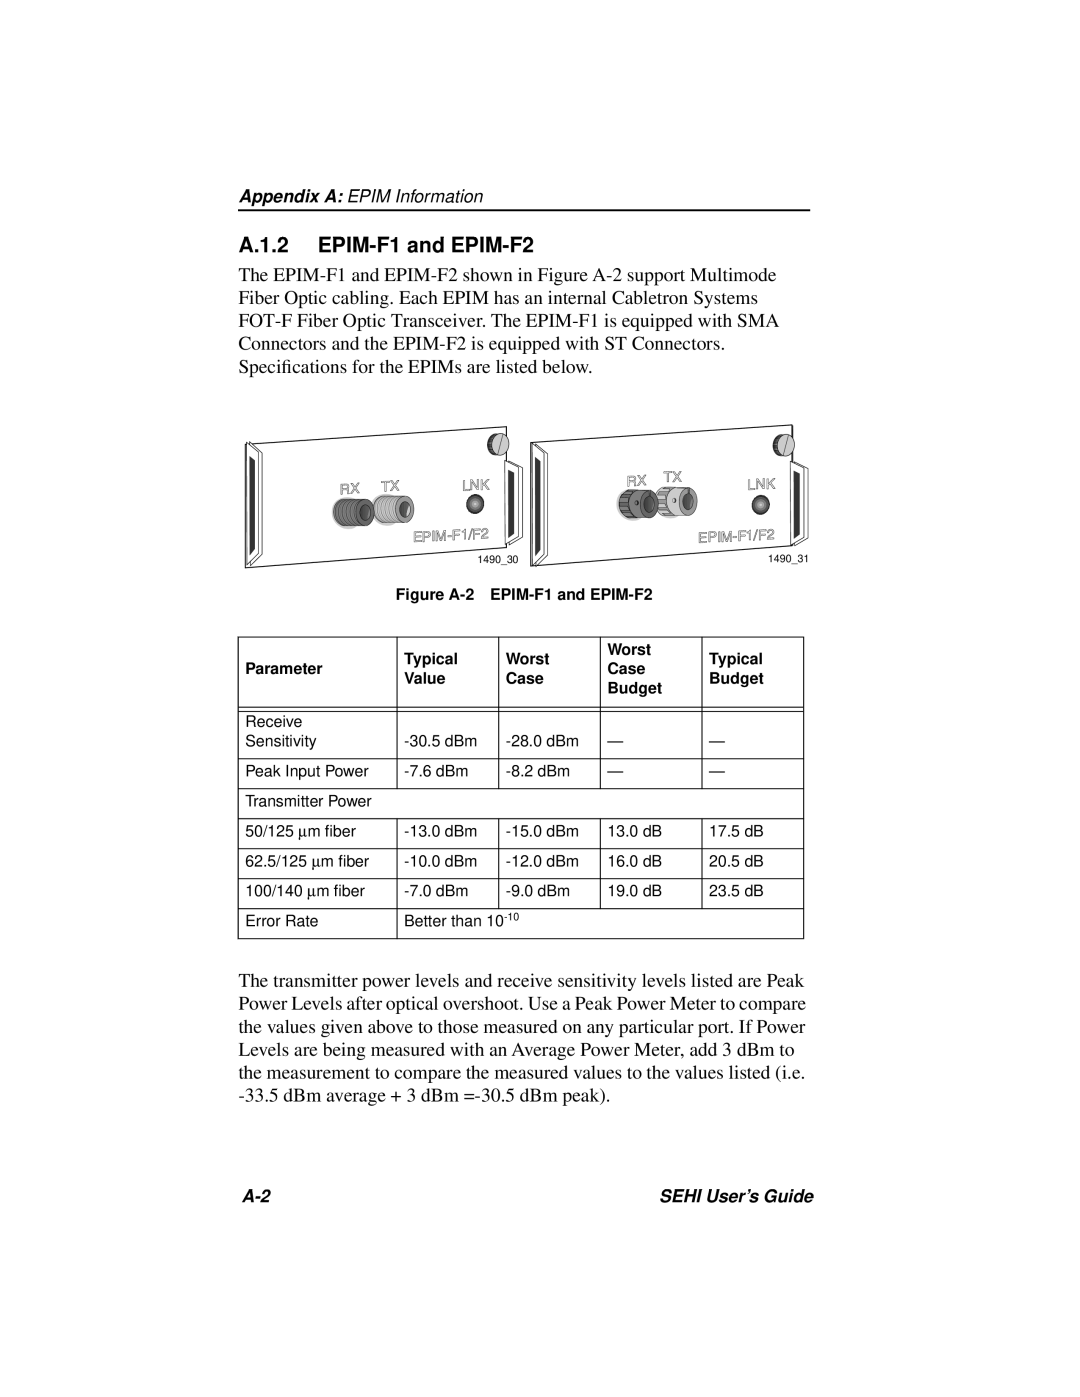 Cabletron Systems SEHI-22FL manual A.1.2 EPIM-F1 and EPIM-F2, Appendix A EPIM Information 